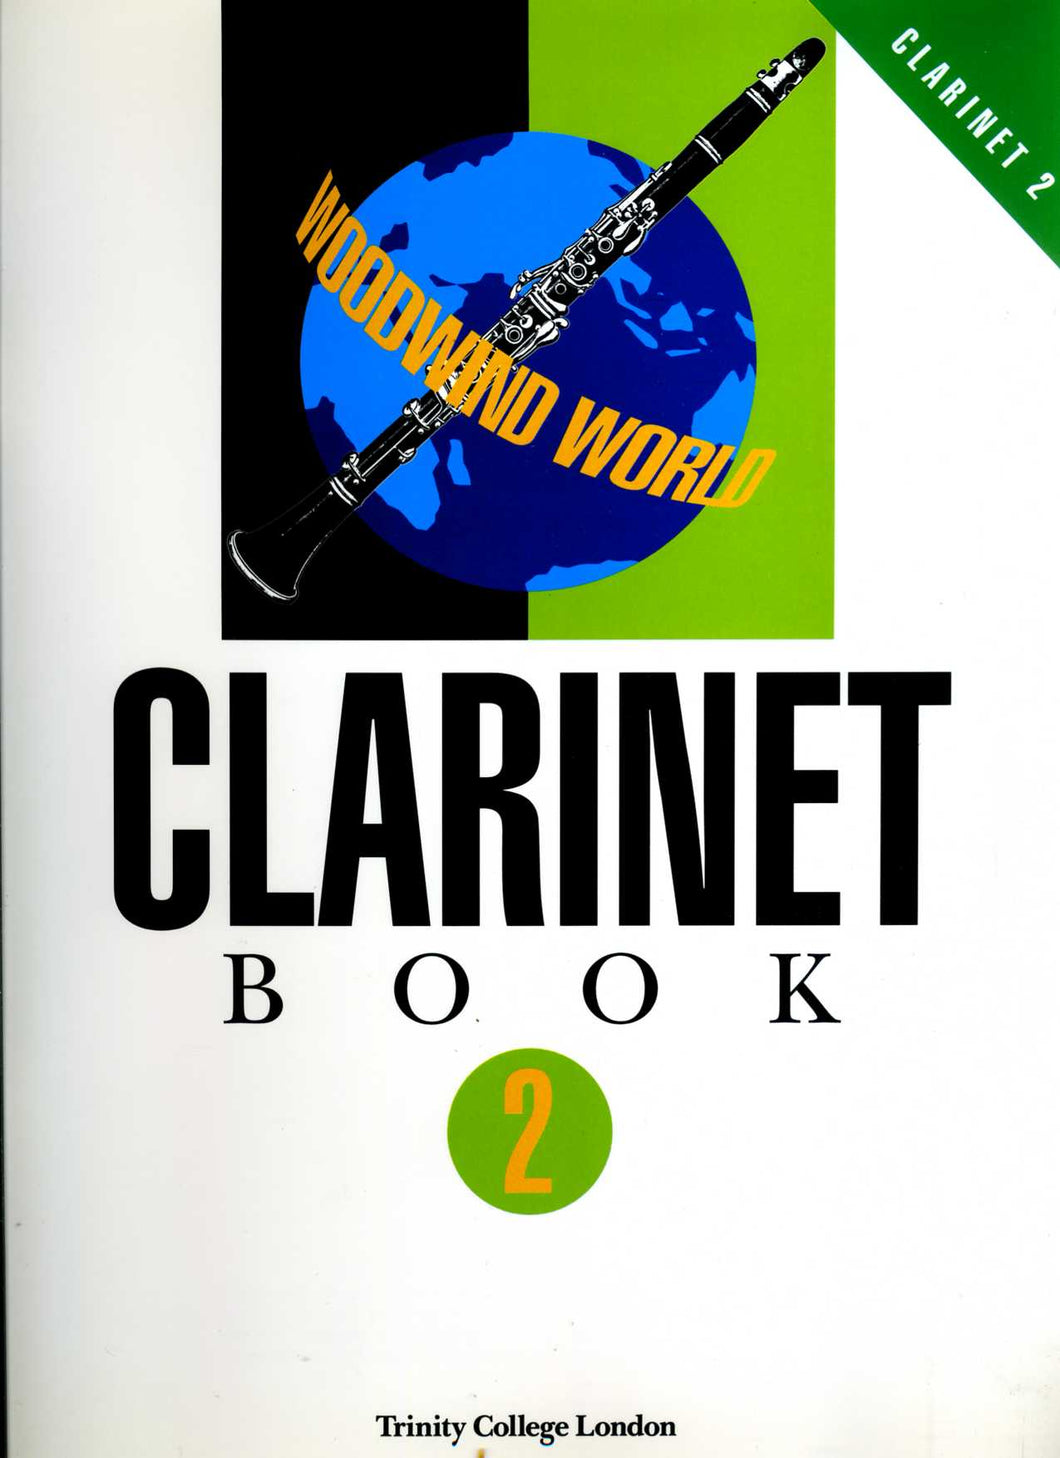 *Woodwind World Clarinet 2 [Clarinet and Piano]